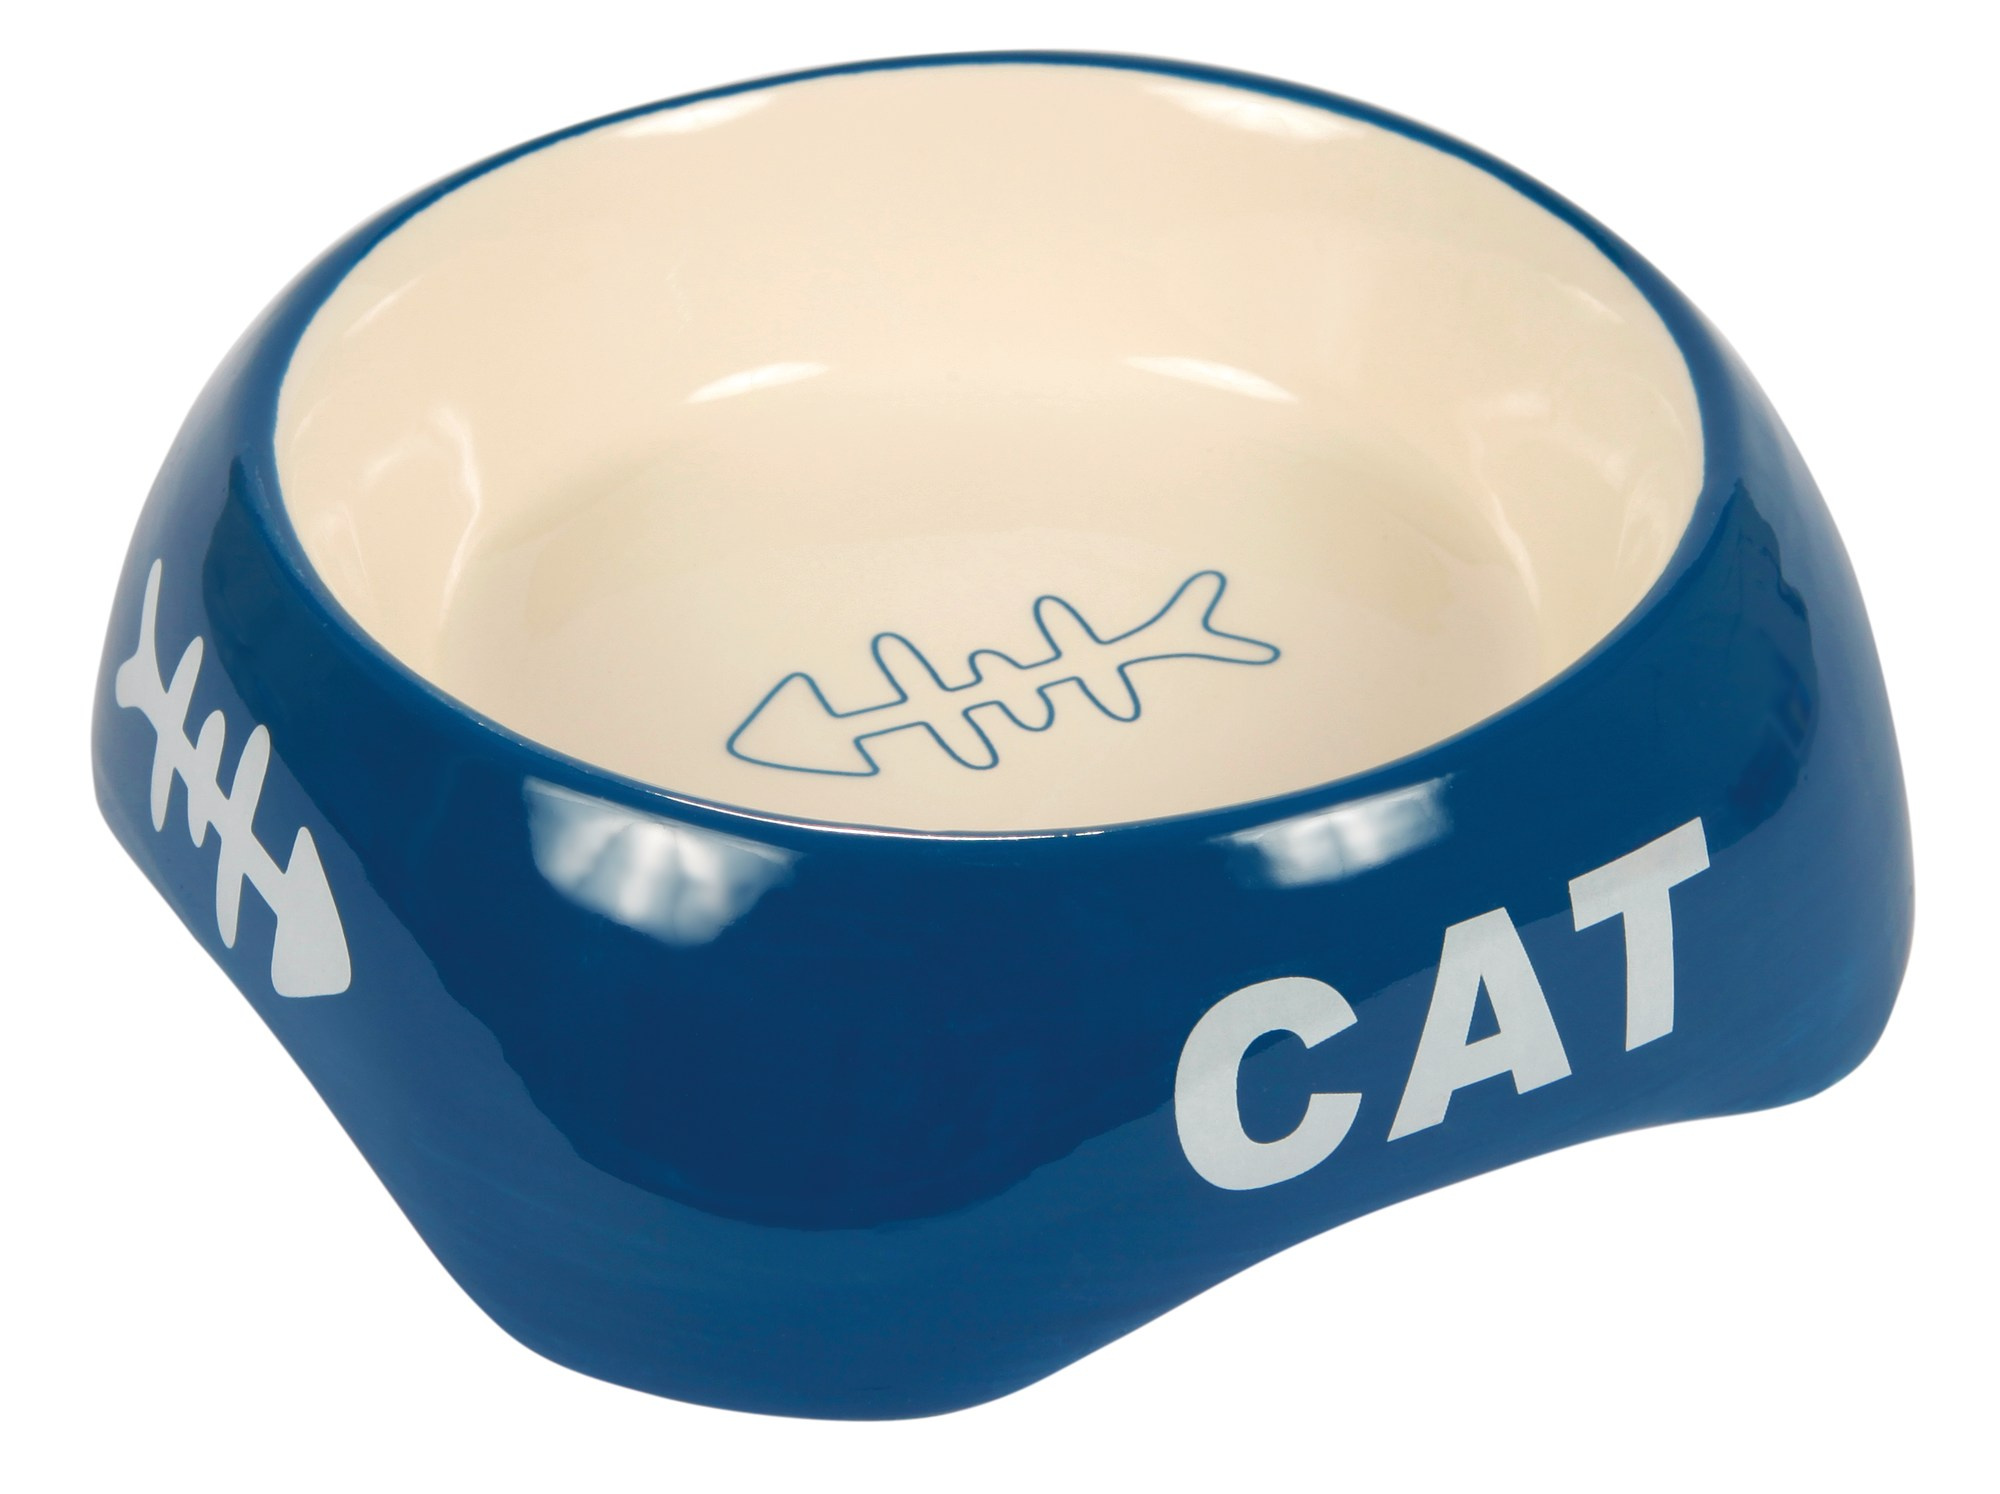 Castron Ceramica 0.2 l/13 cm 24498 petmart